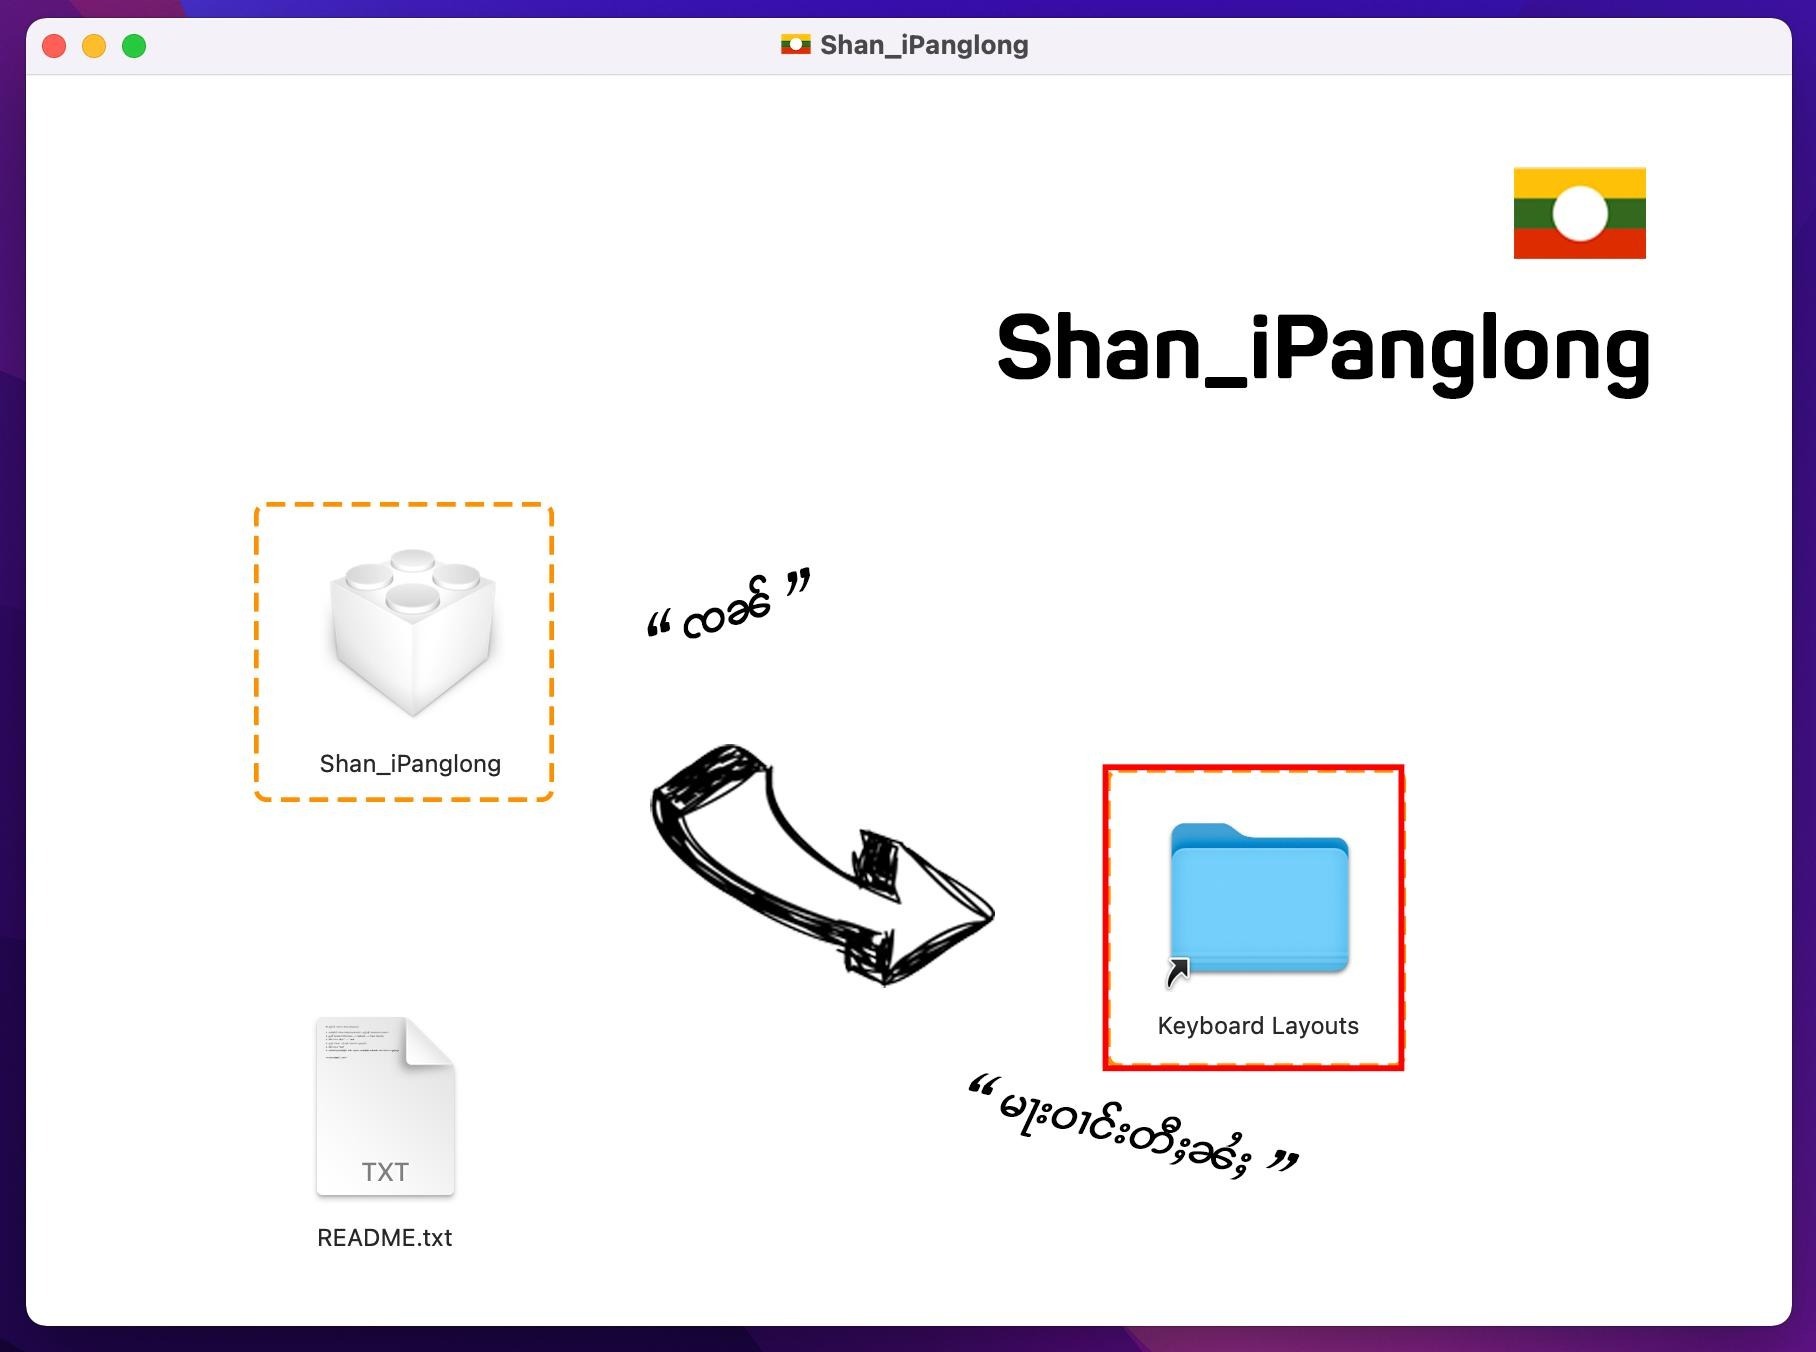 Shan iPanglong လွၵ်းမိုဝ်းတႆးတႃႇၶွမ်း Mac 3